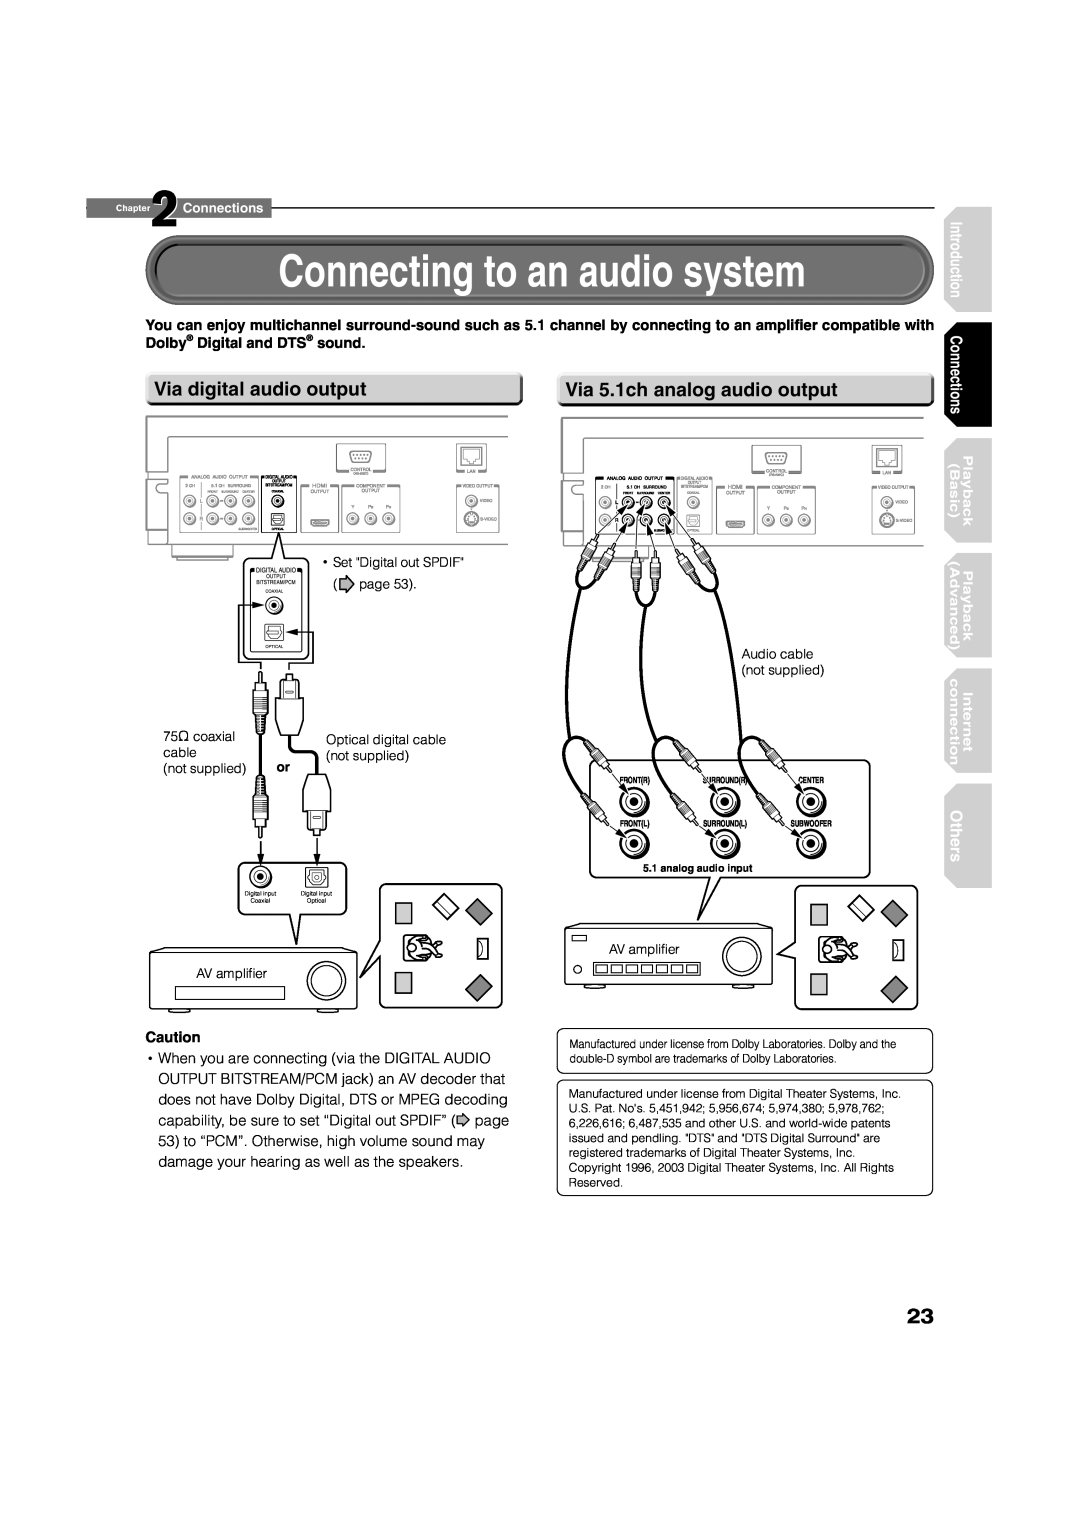 Toshiba HD-A1 Connecting to an audio system, Via digital audio output, Via 5.1ch analog audio output, Basic, Playback 